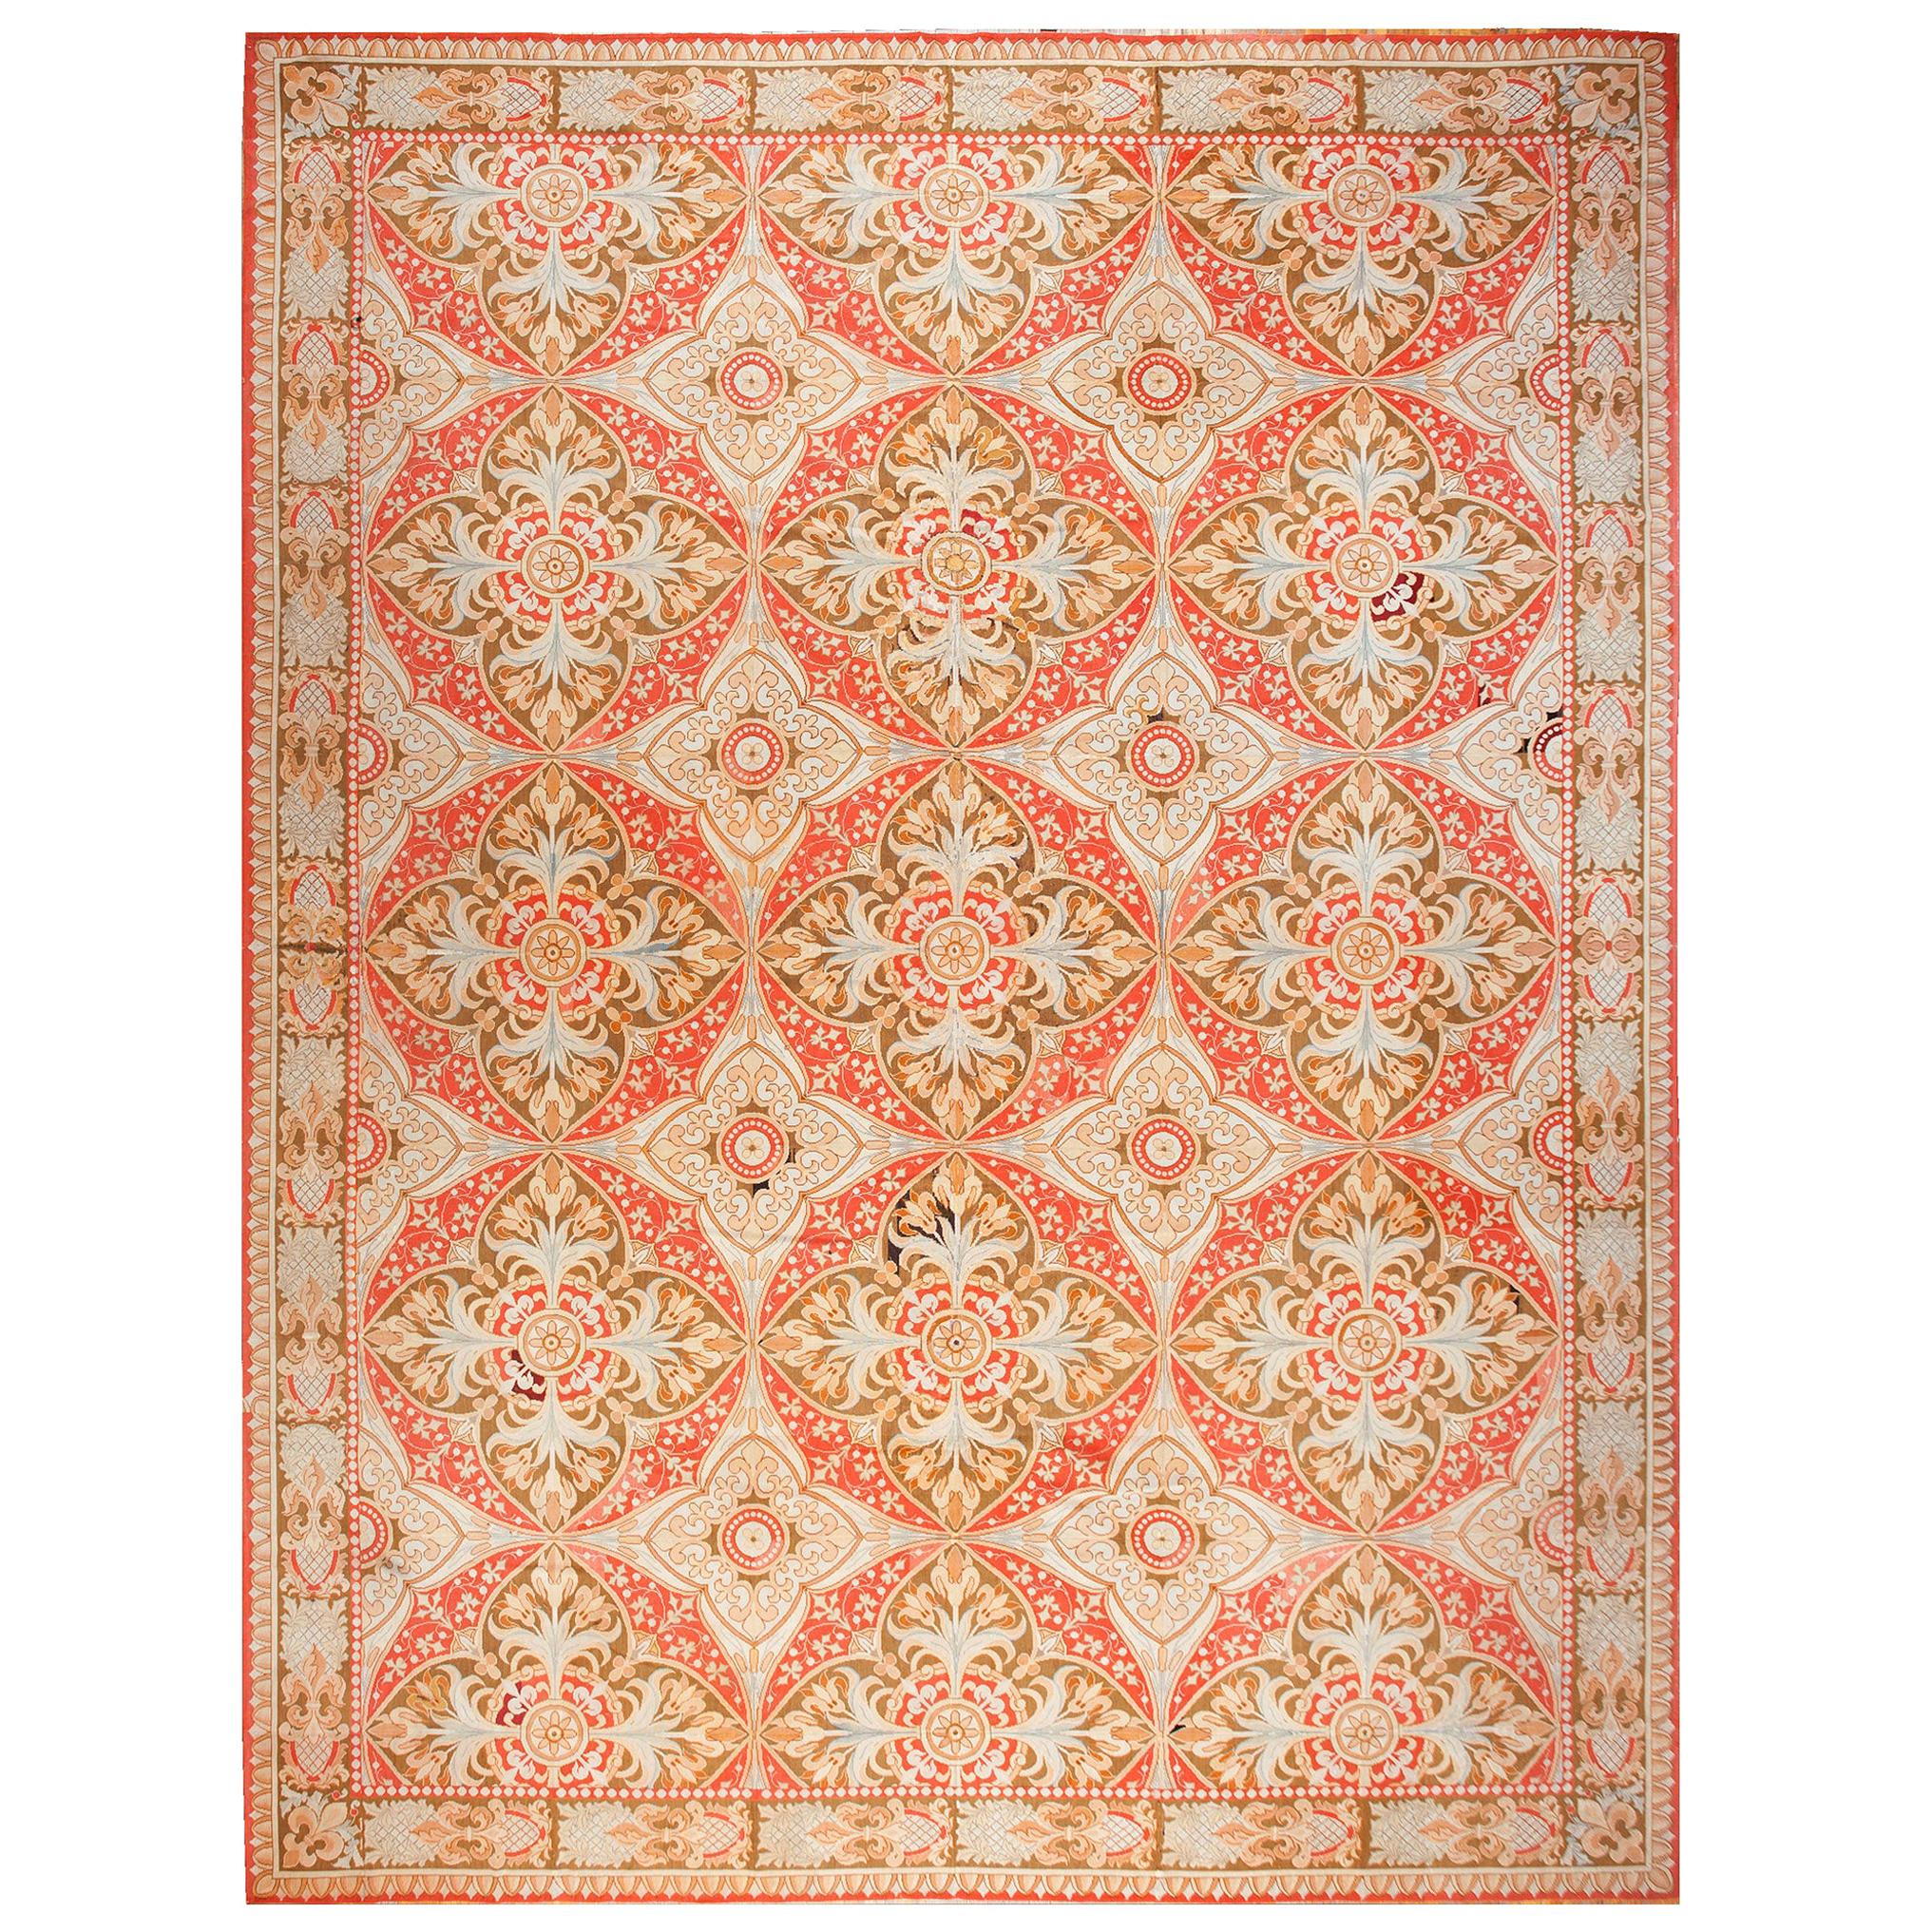 19th Century French Needlepoint Carpet ( 13'4" x 18' - 406 x 549 )